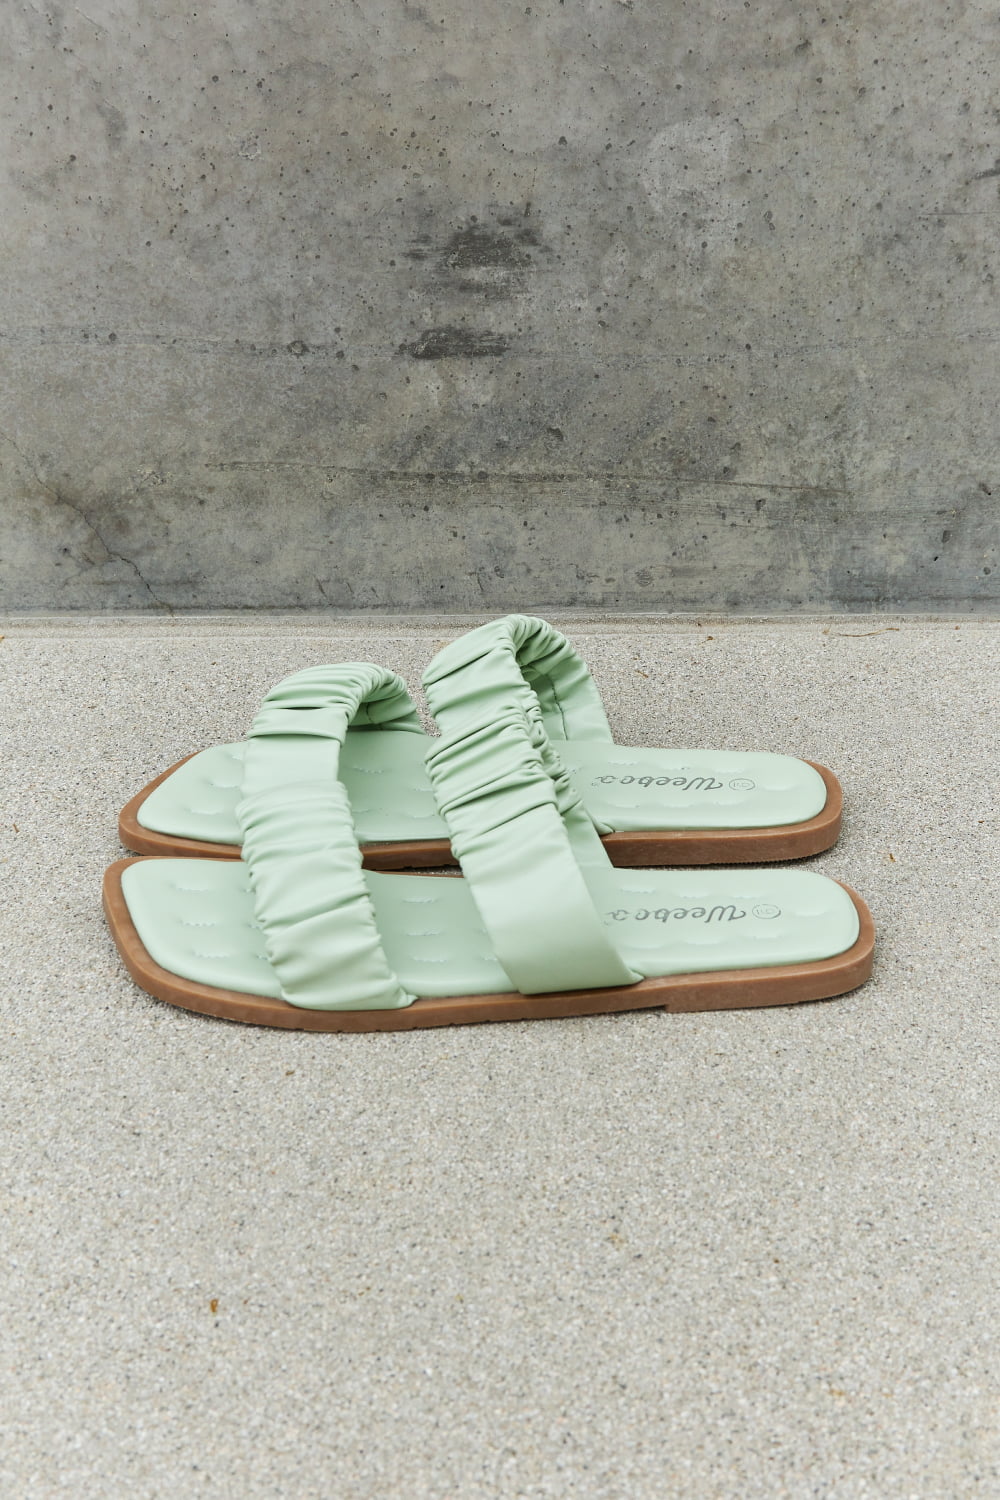 Weeboo Double Strap Scrunch Sandal in Gum Leaf - nailedmoms